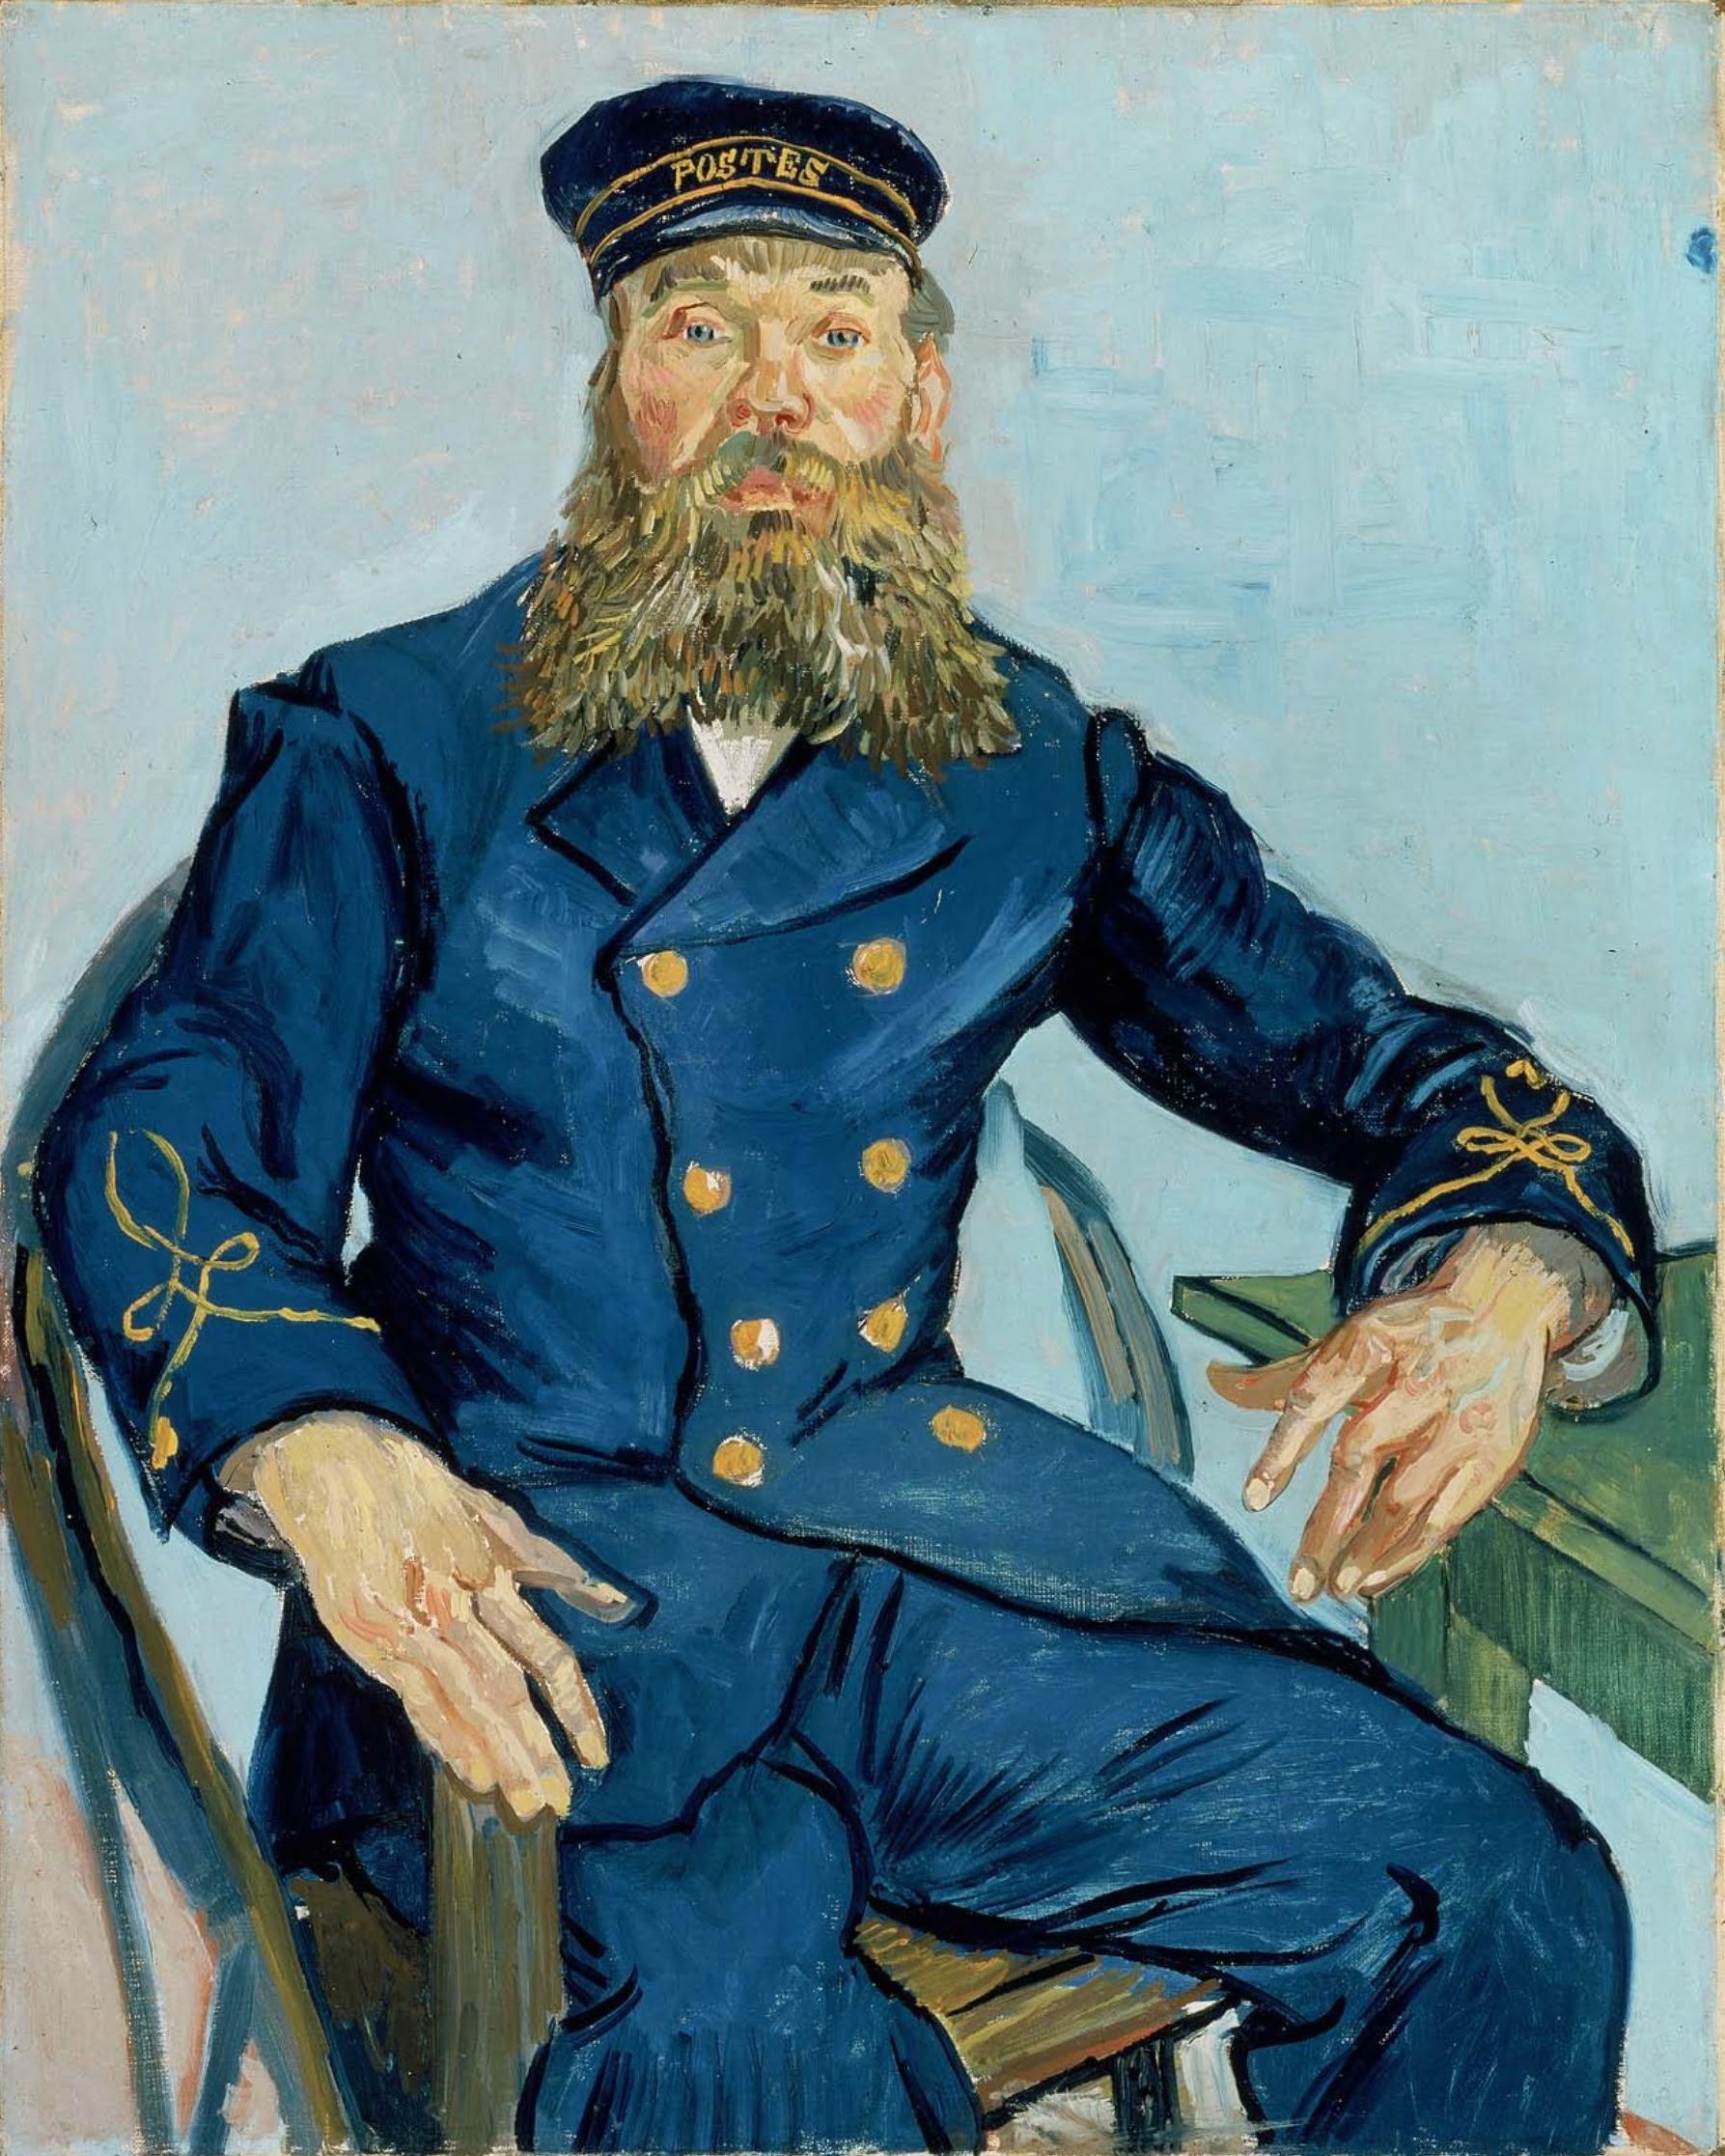 Pintura del cartero Joseph Roulin, con uniforme azul